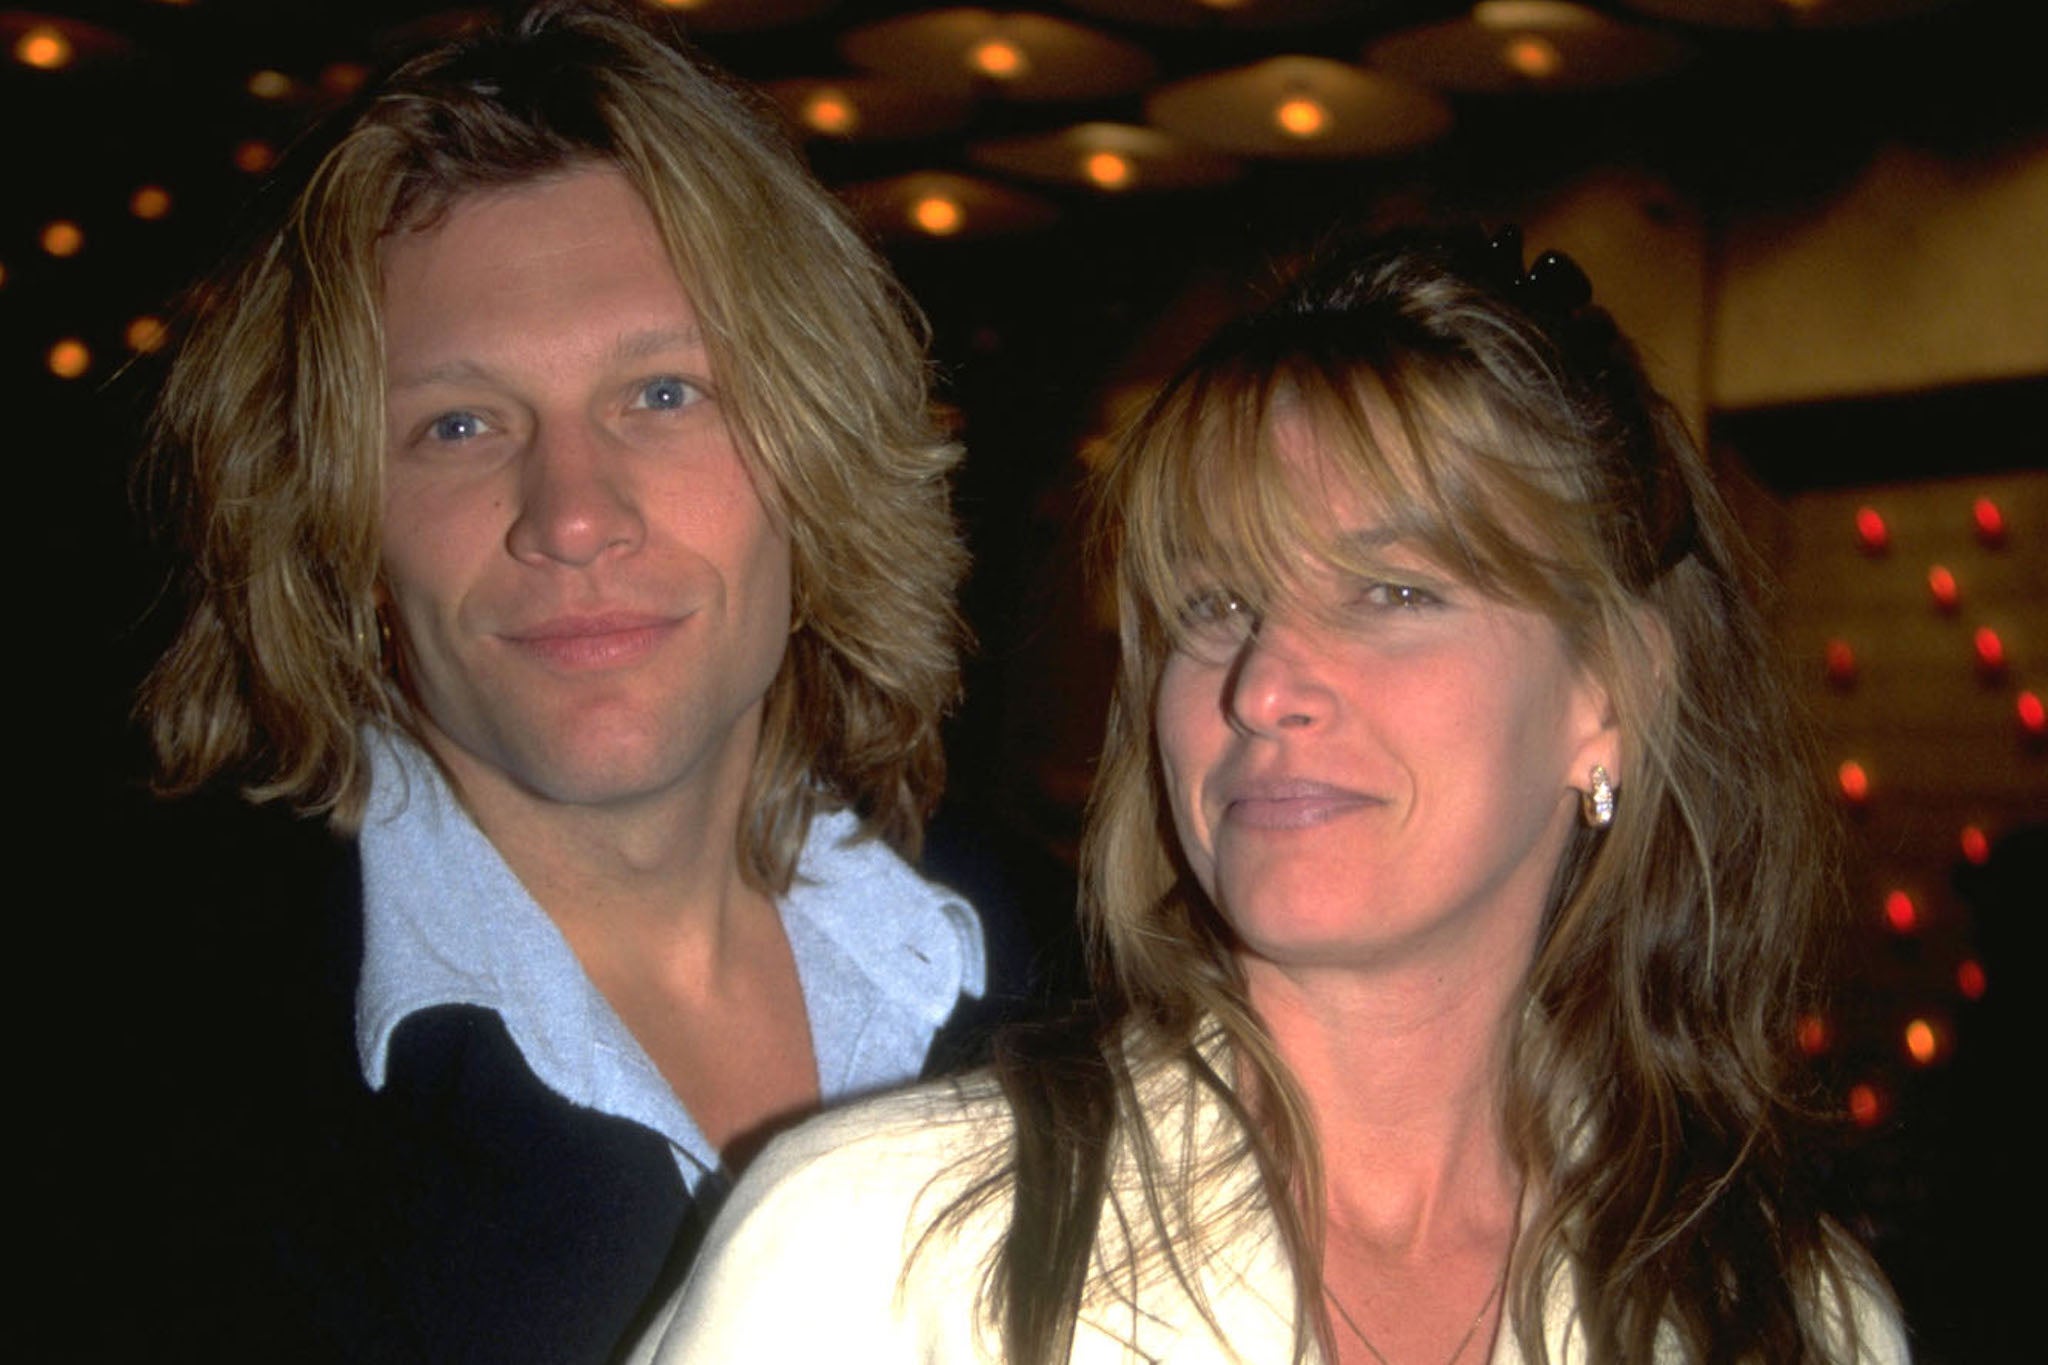 Jon Bon Jovi and wife Dorothea will soon celebrate their 35th wedding anniversary